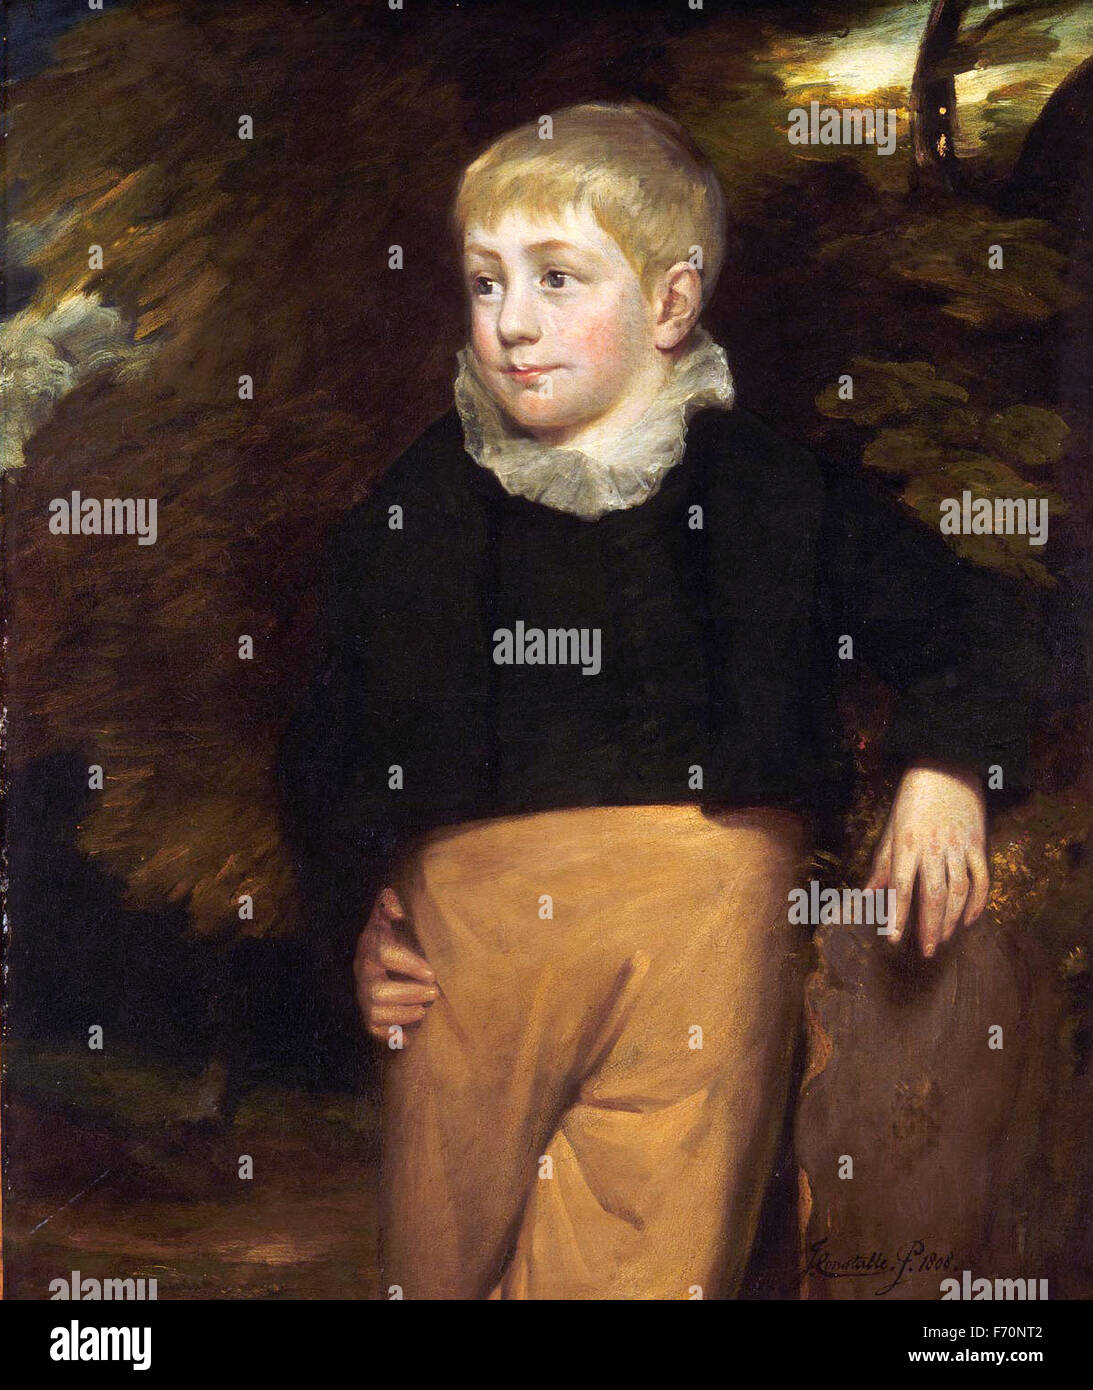 John Constable - Portrait de Maître Crosby Banque D'Images